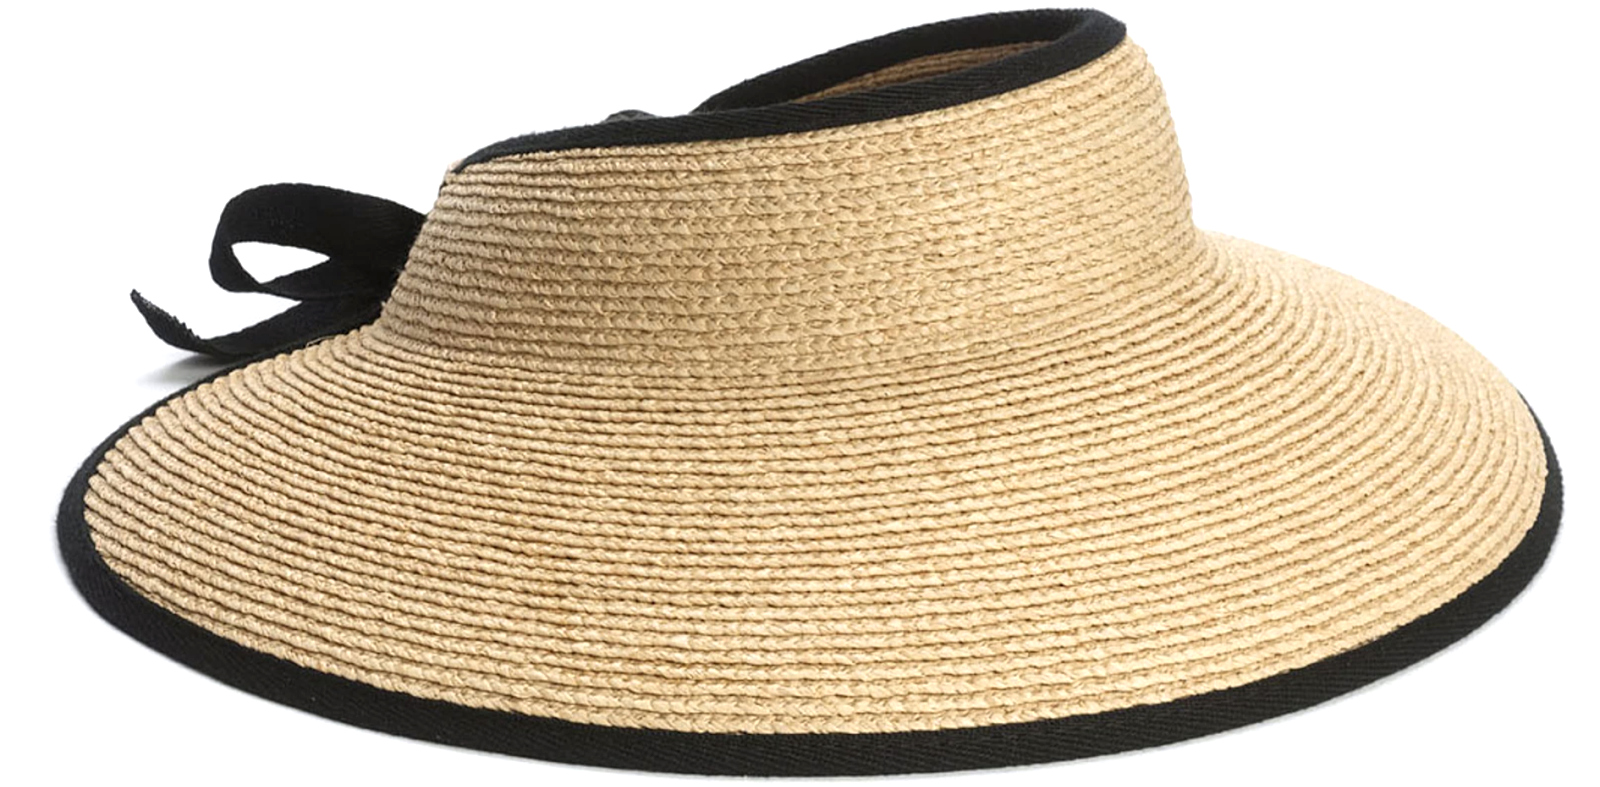 QTKJ Summer Anti-UV Protection Sun Visor Straw Hats Travel Wide Brim Beach Hat with Black Decorative Belt for Women Girls Mom Gifts 